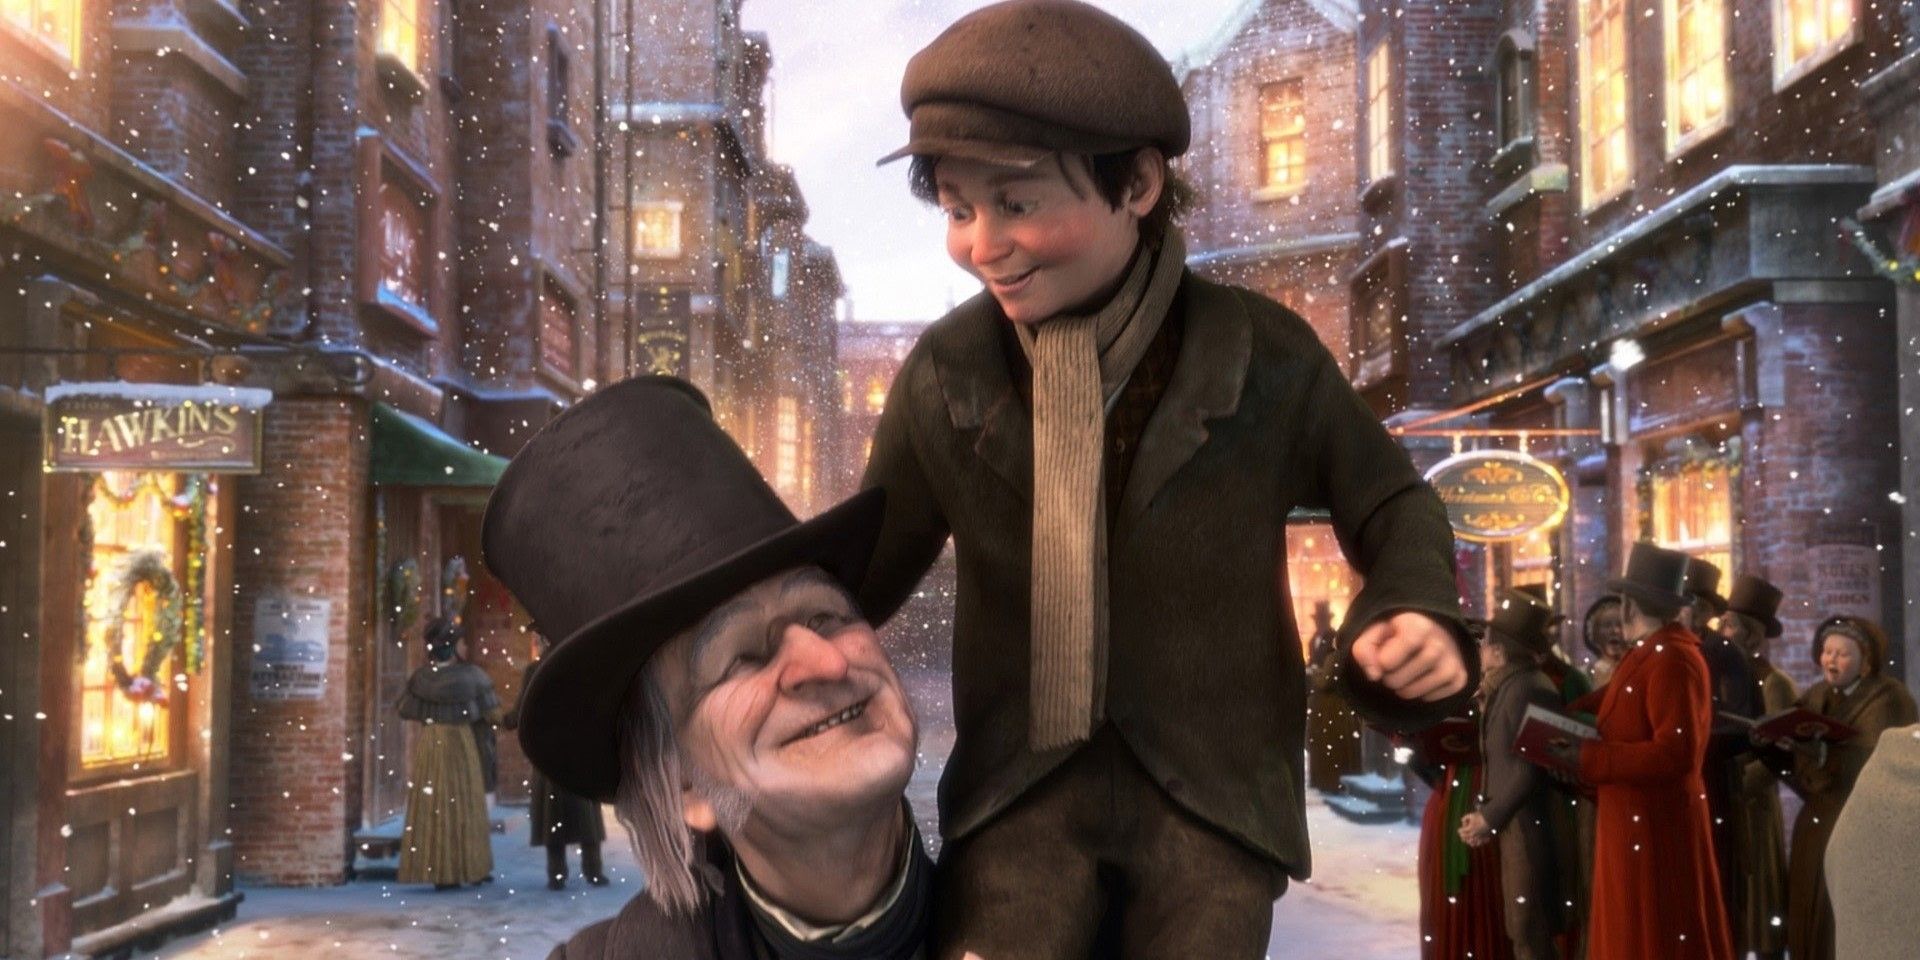 Tiny Tim sitting on Ebeneezer Scrooge's shoulder in A Christmas Carol